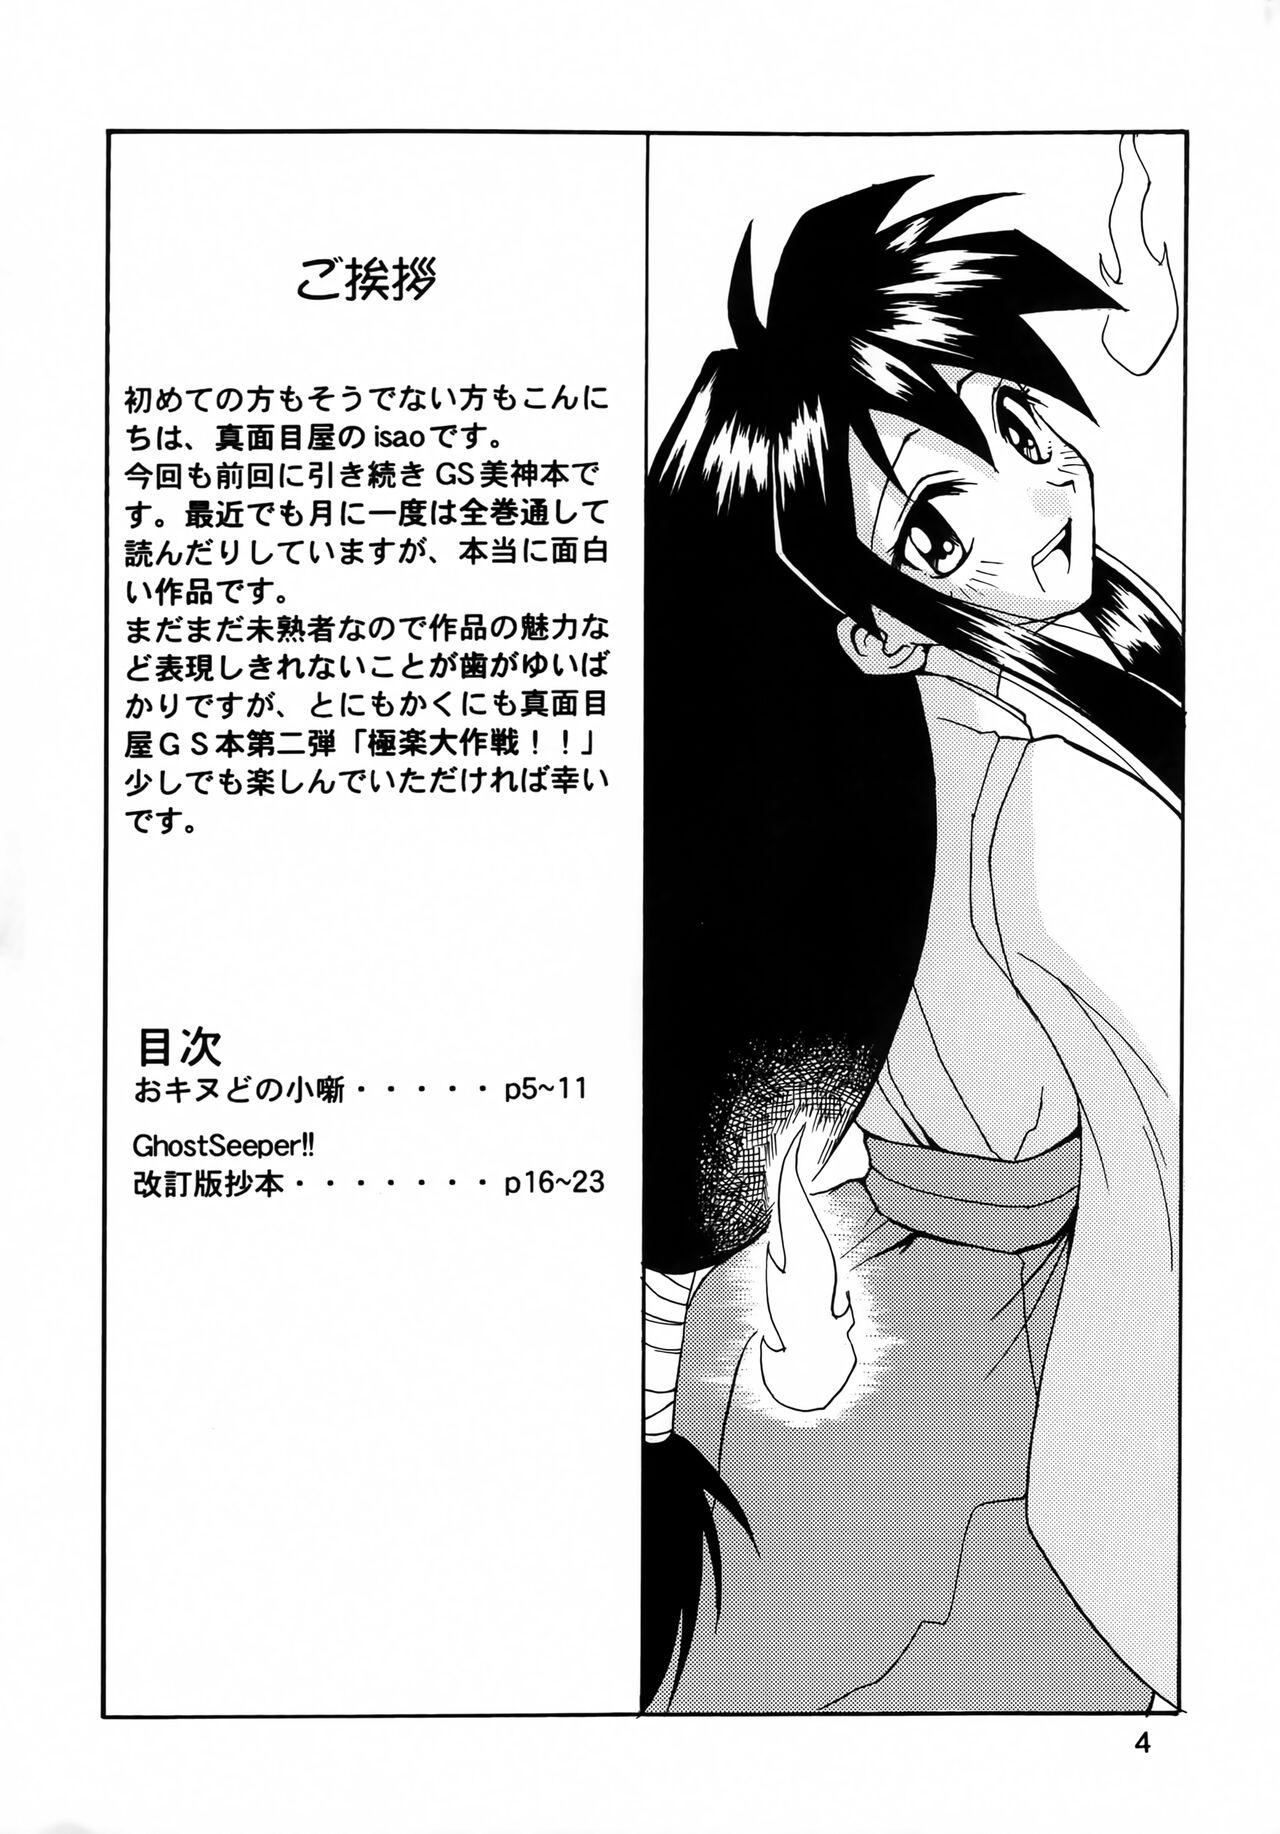 Outside GhostSweeper!! 2 Gokuraku Daisakusen!! - Ghost sweeper mikami Hotwife - Page 3